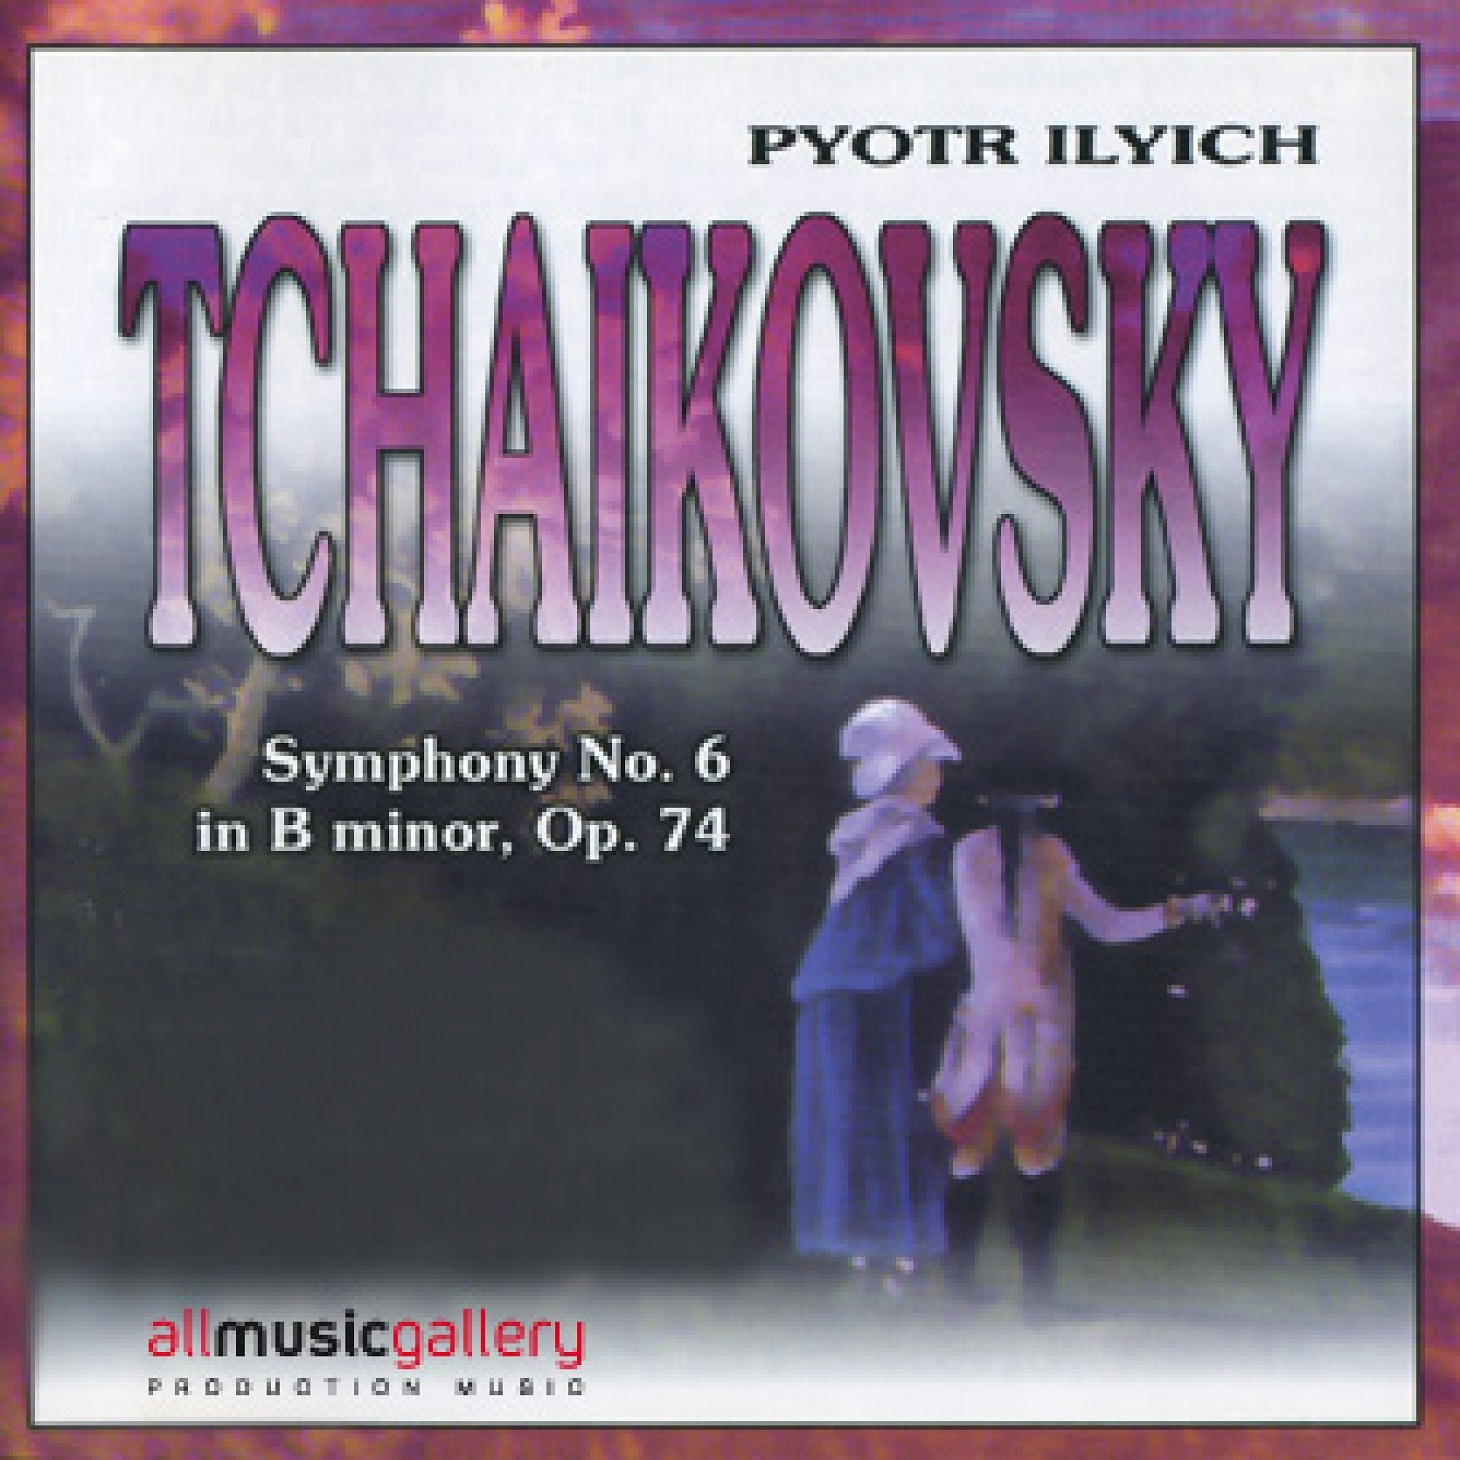 Tchaikovsky - Symphony No.6 in B minor, Op.74